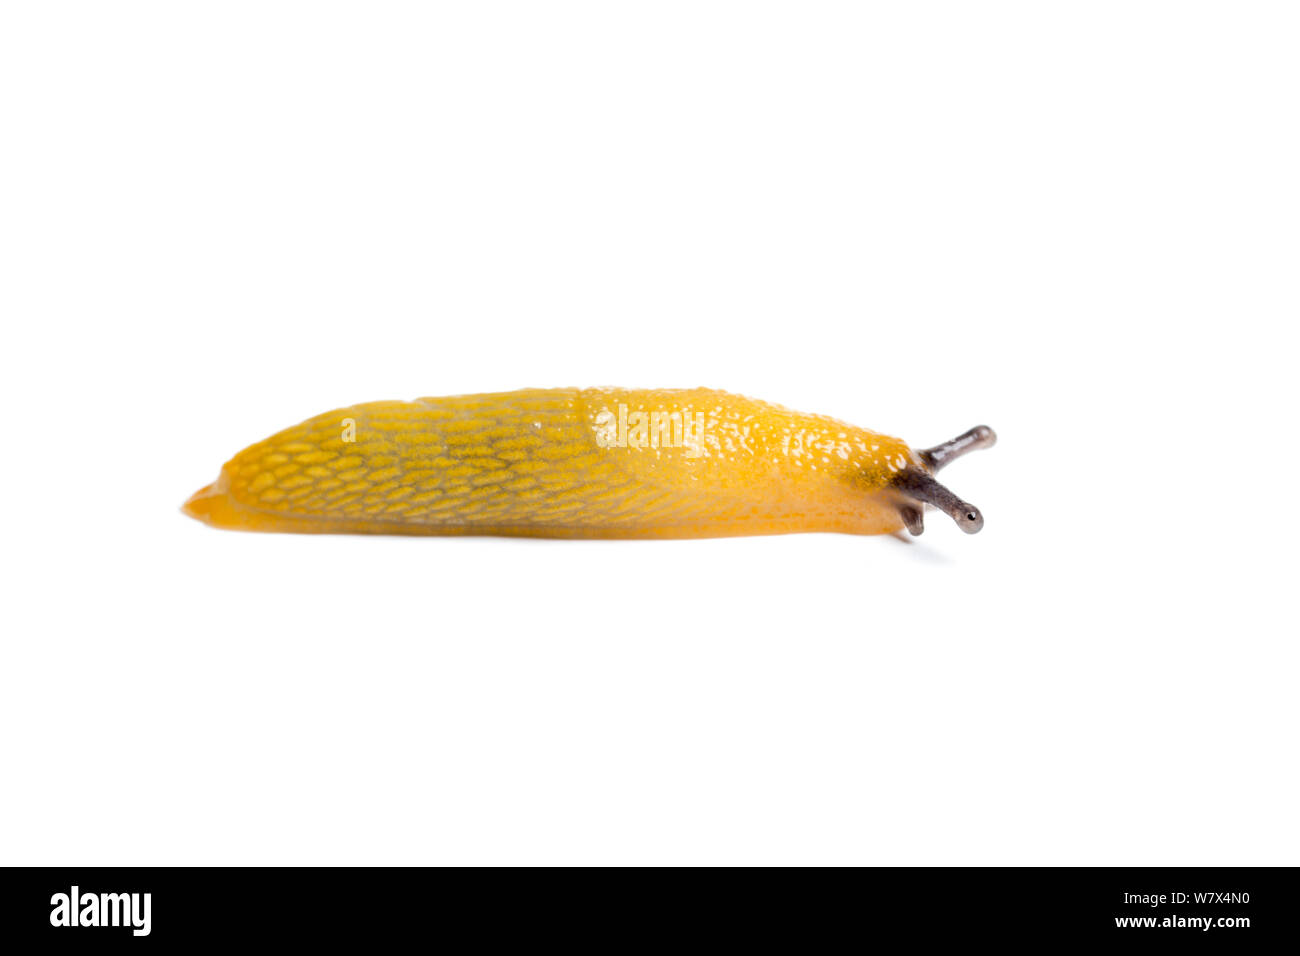 Lemon slug (Malacolimax tenellus - formerly Limax tenellus) - an indicator of ancient woodland that feeds mainly on fungi, UK. May. Stock Photo